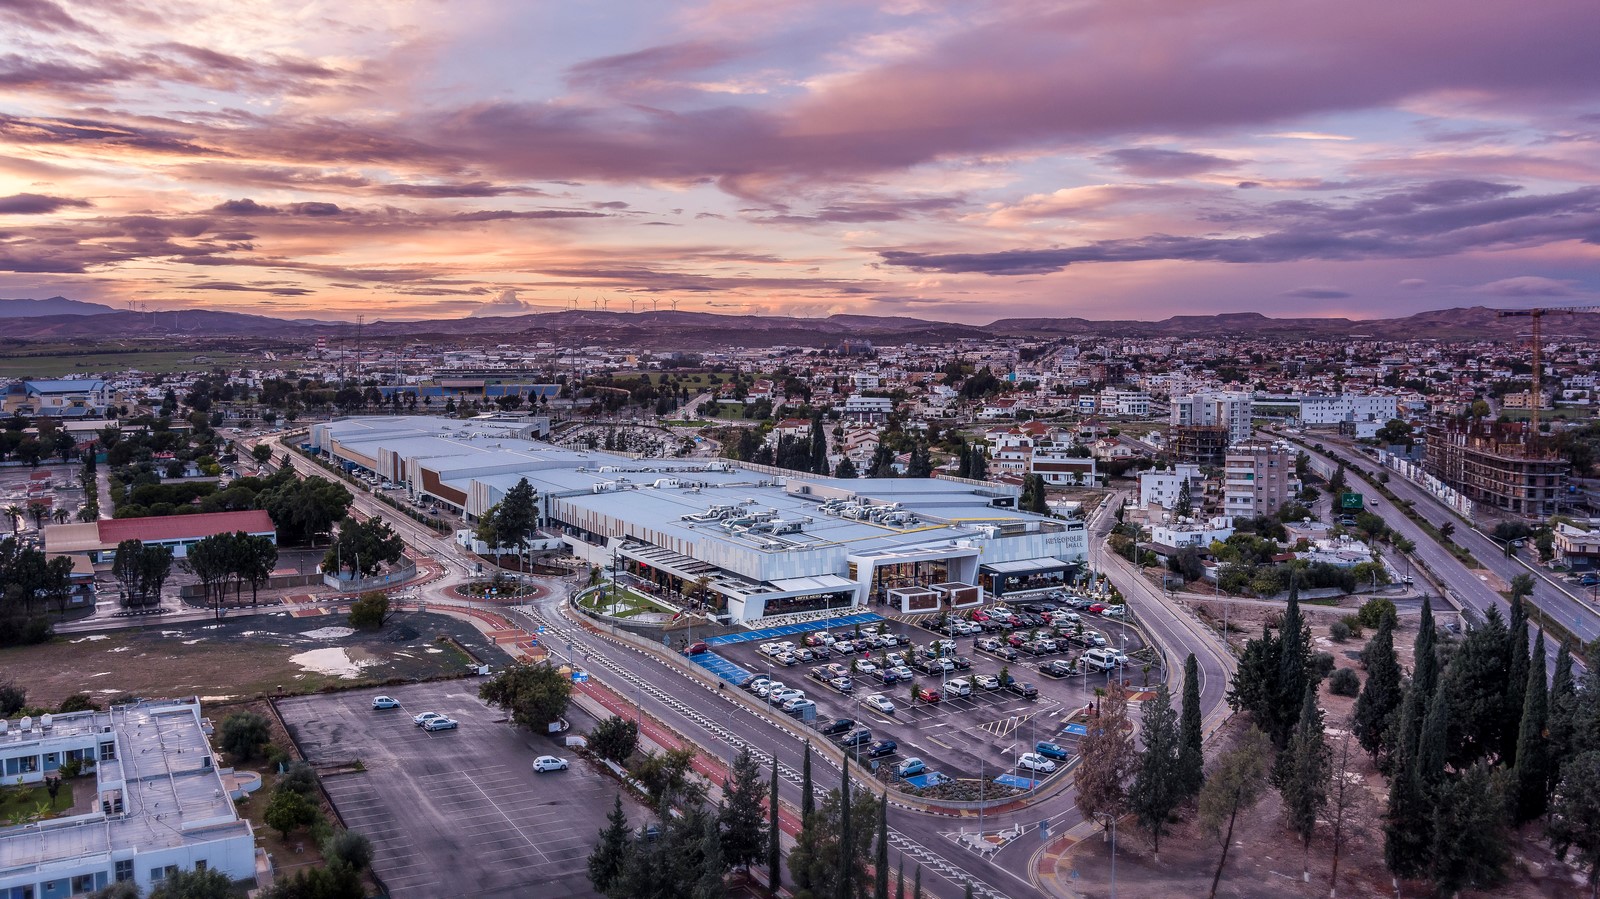 Metropolis Mall@Larnaca by OFFICETWENTYFIVEARCHITECTS - Sheet5